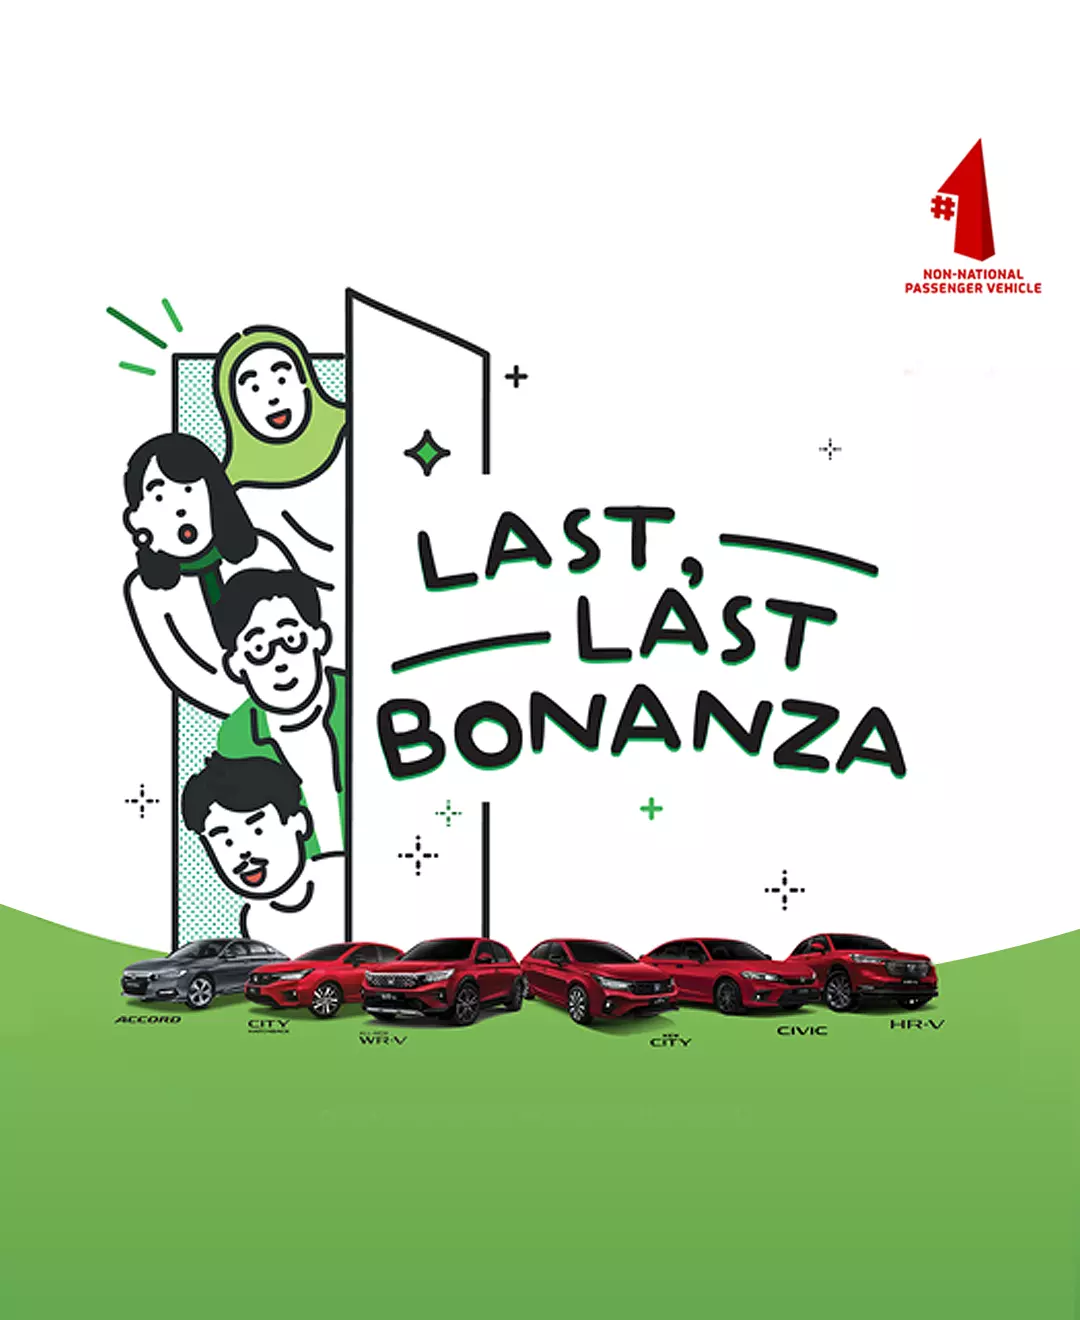 Last, Last Bonanza